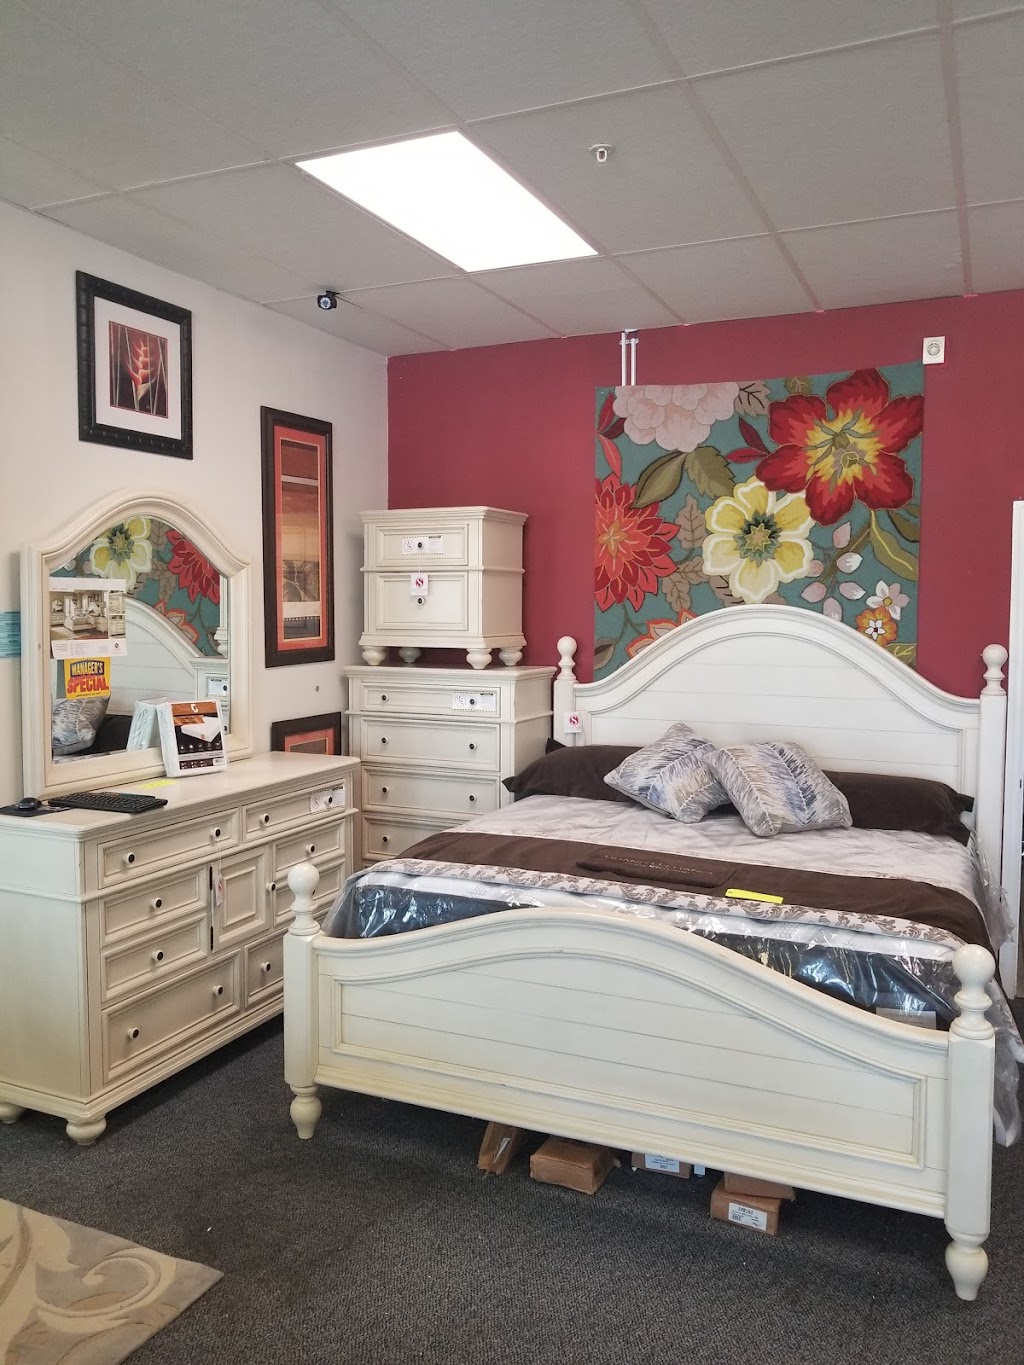 Best Price Furniture & Bedding | Photo 5 of 10 | Address: 861 Sadler Rd, Fernandina Beach, FL 32034, USA | Phone: (904) 261-3968